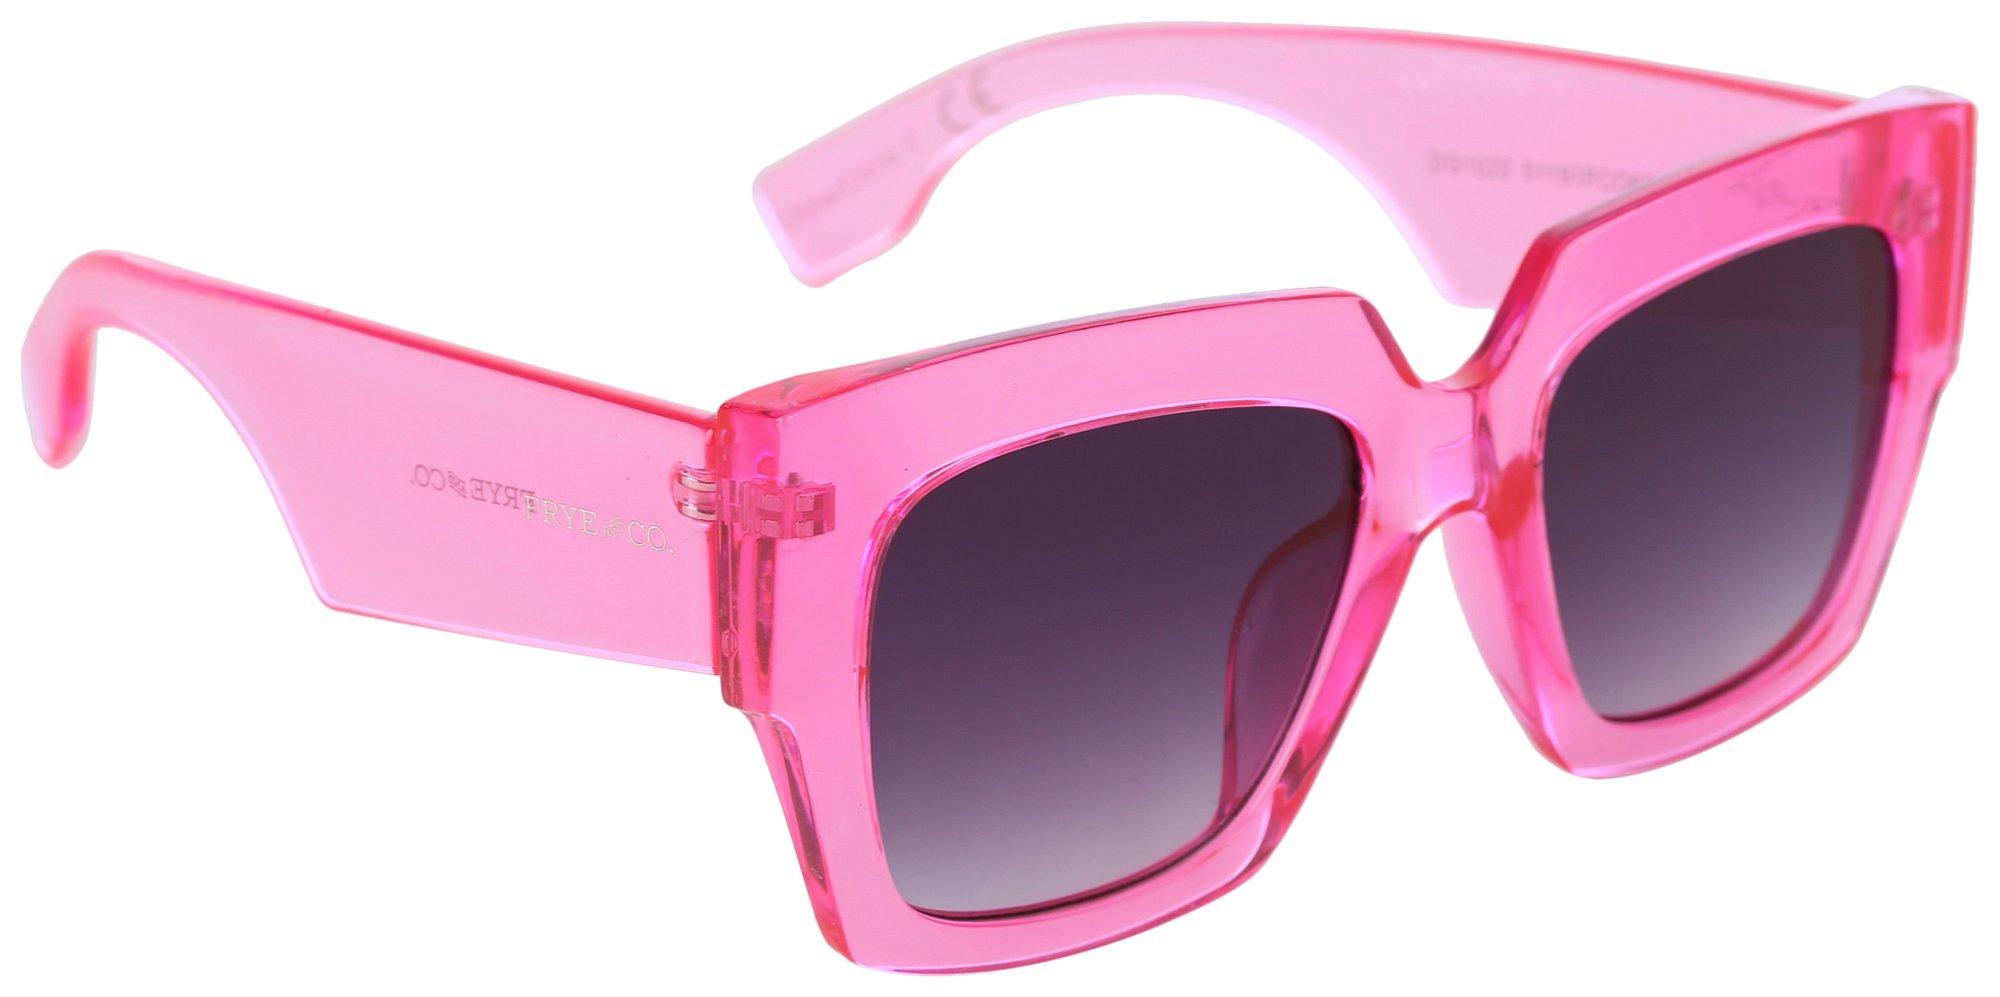 FRYE & CO Womens Translucent Frame Sunglasses